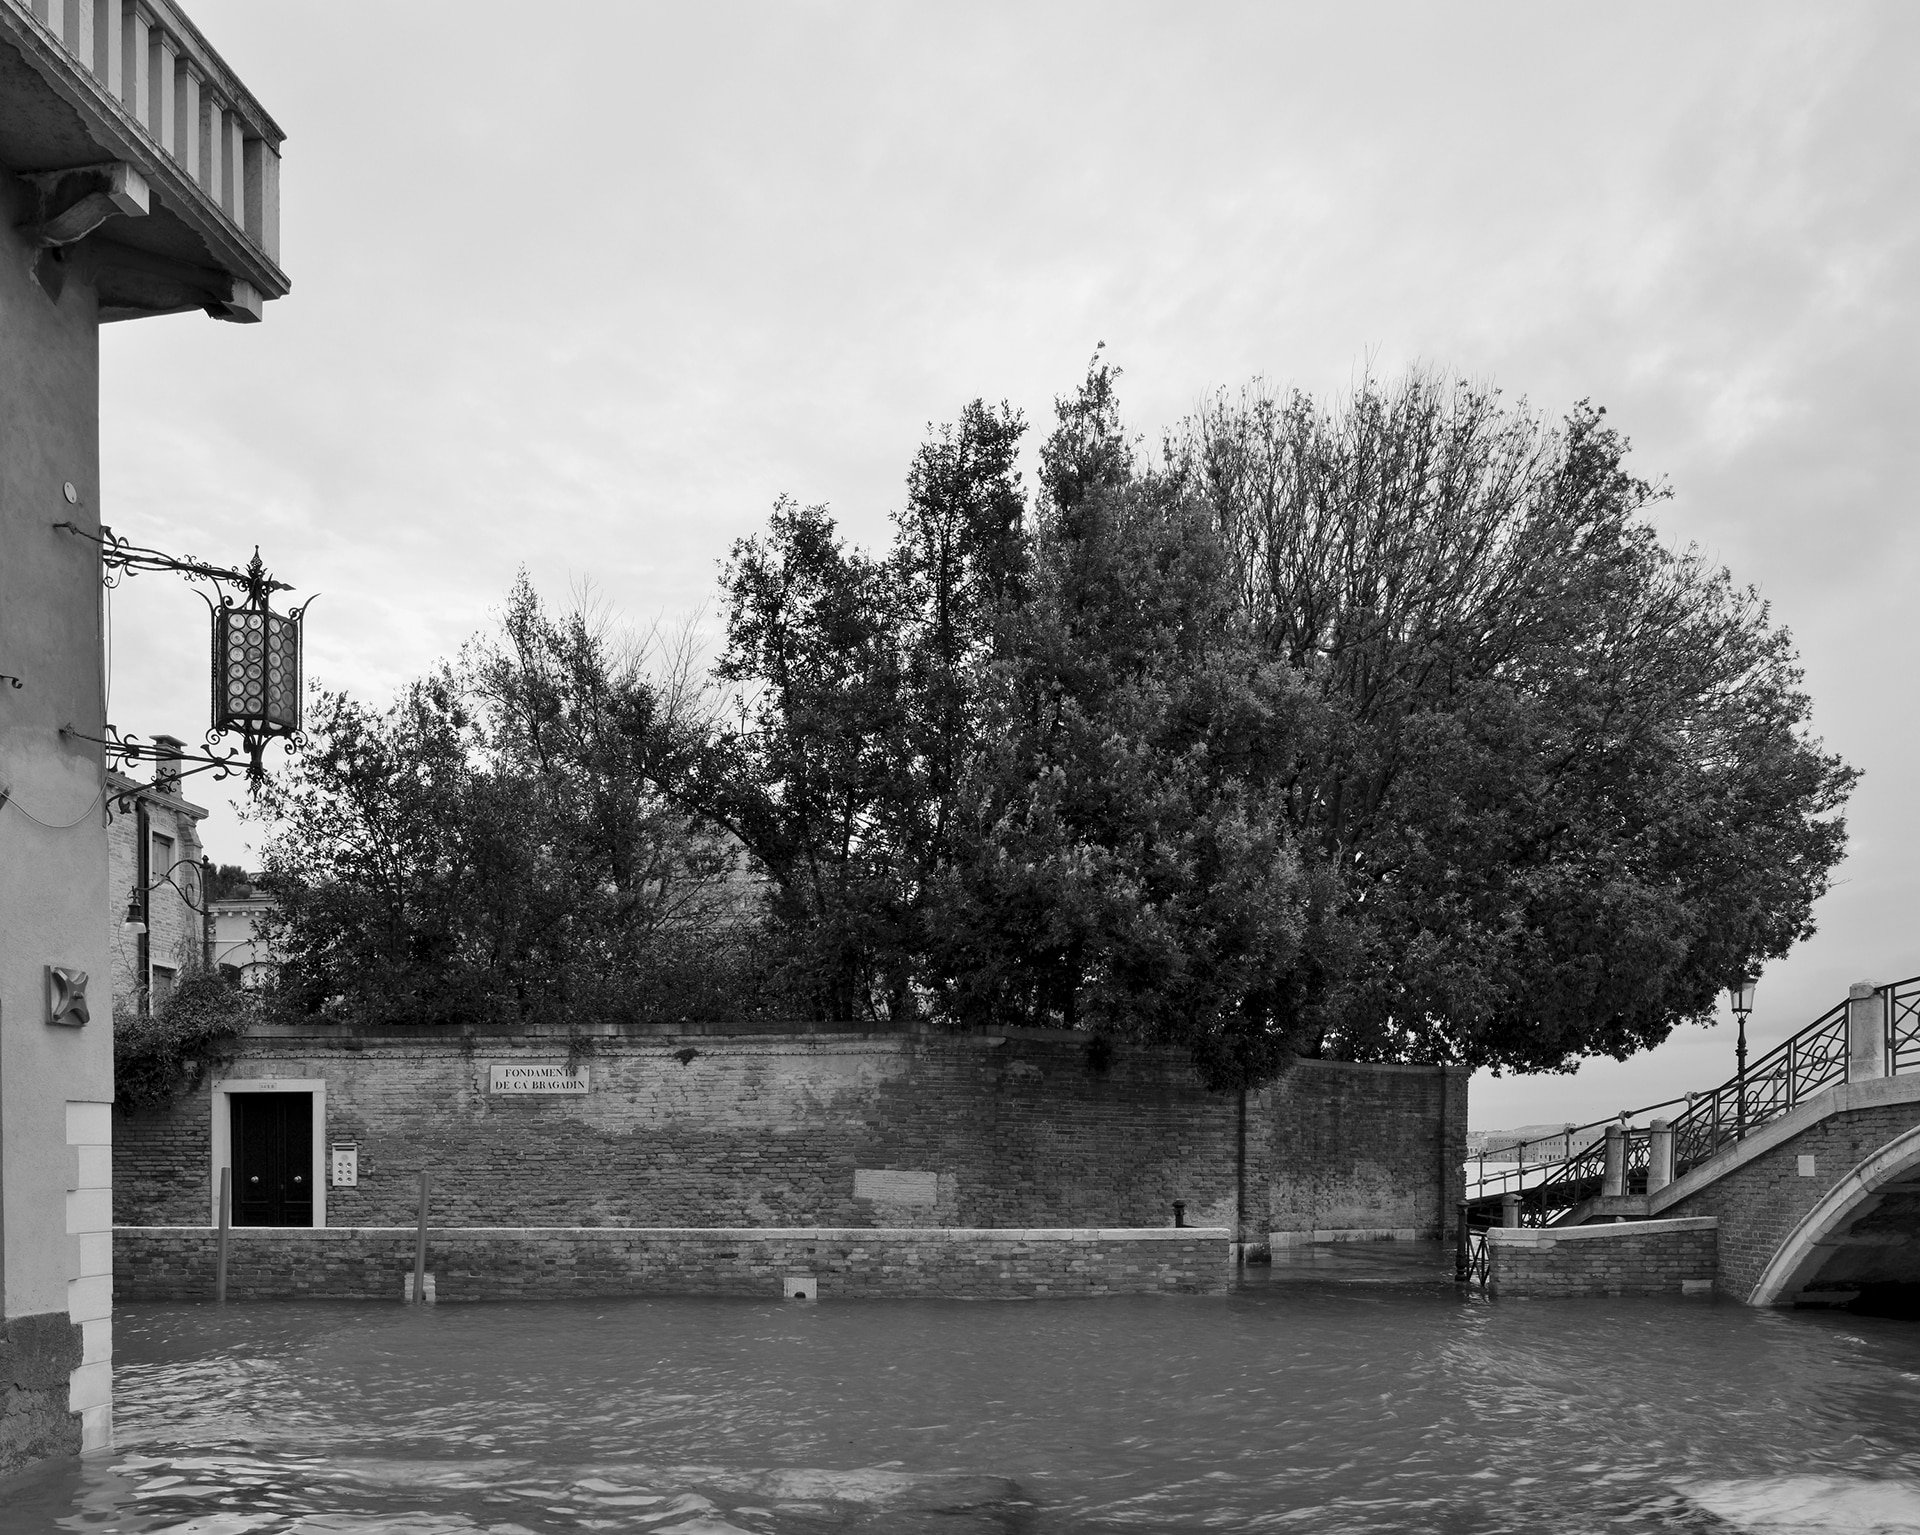 Dorsoduro, Rio de San Vio, 2014 Venice Urban Photo Project / Mario Peliti